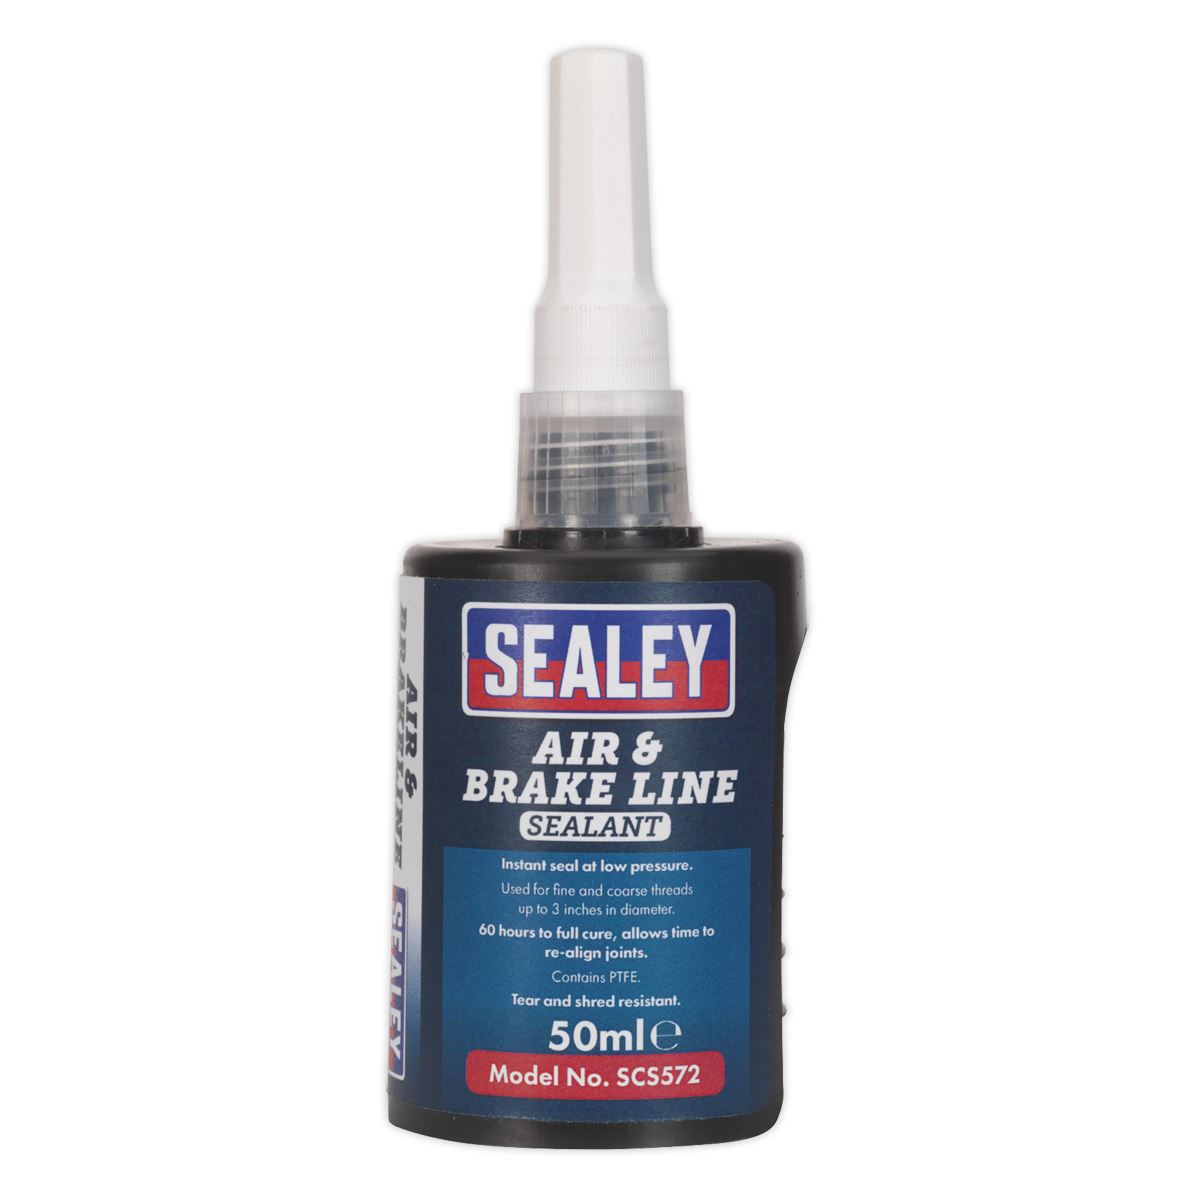 Sealey Air & Brake Line Sealant